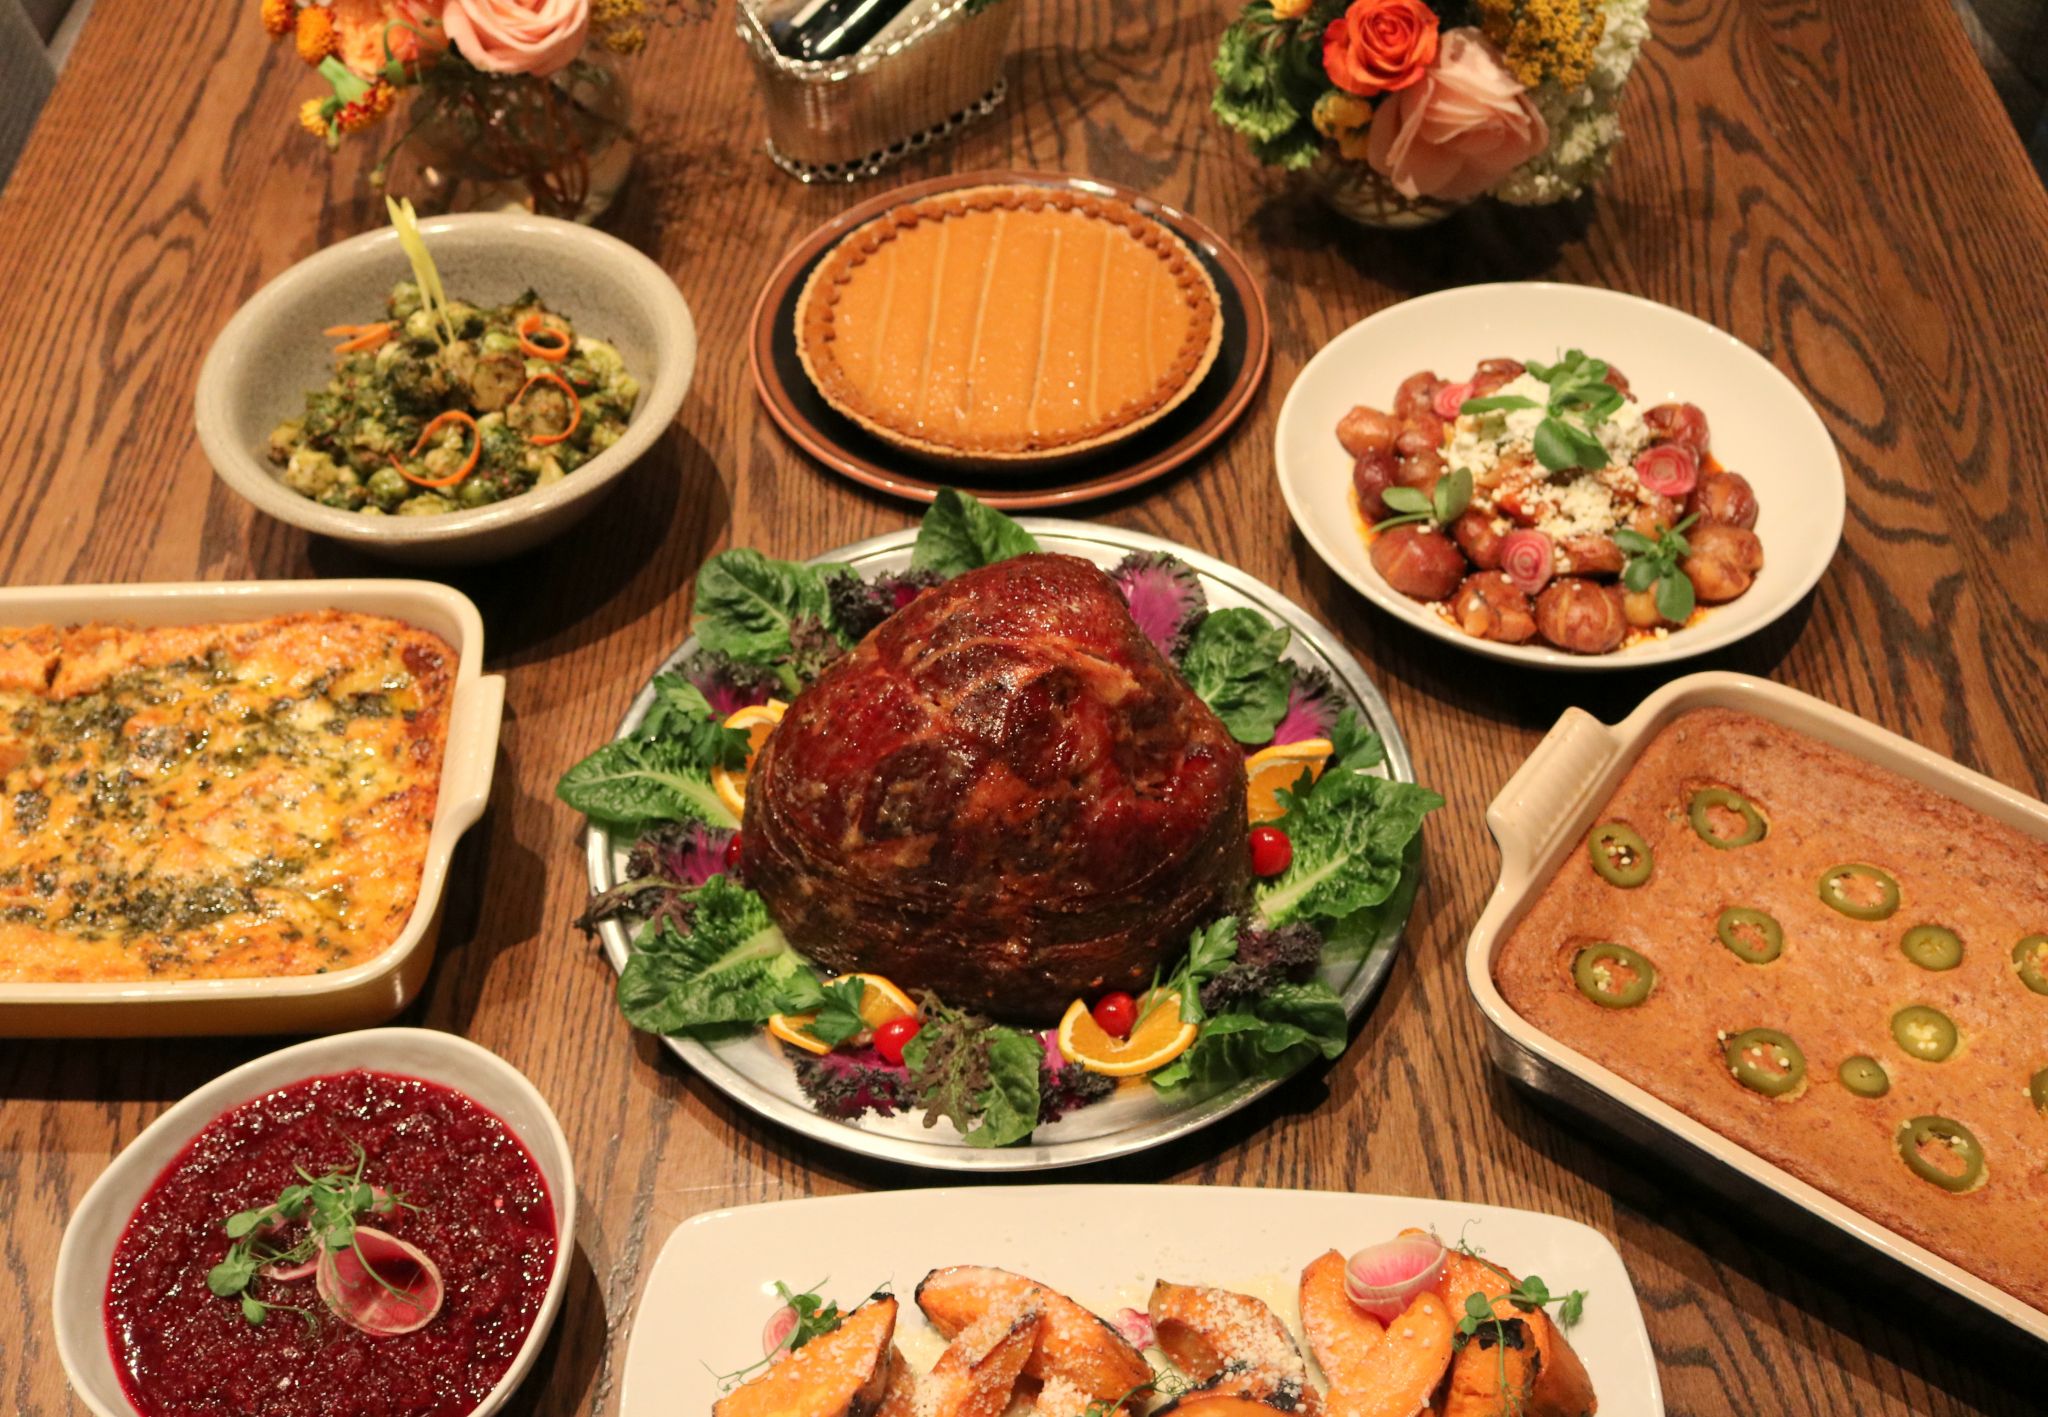 Houston restaurants open for dine-in, to-go Thanksgiving meals